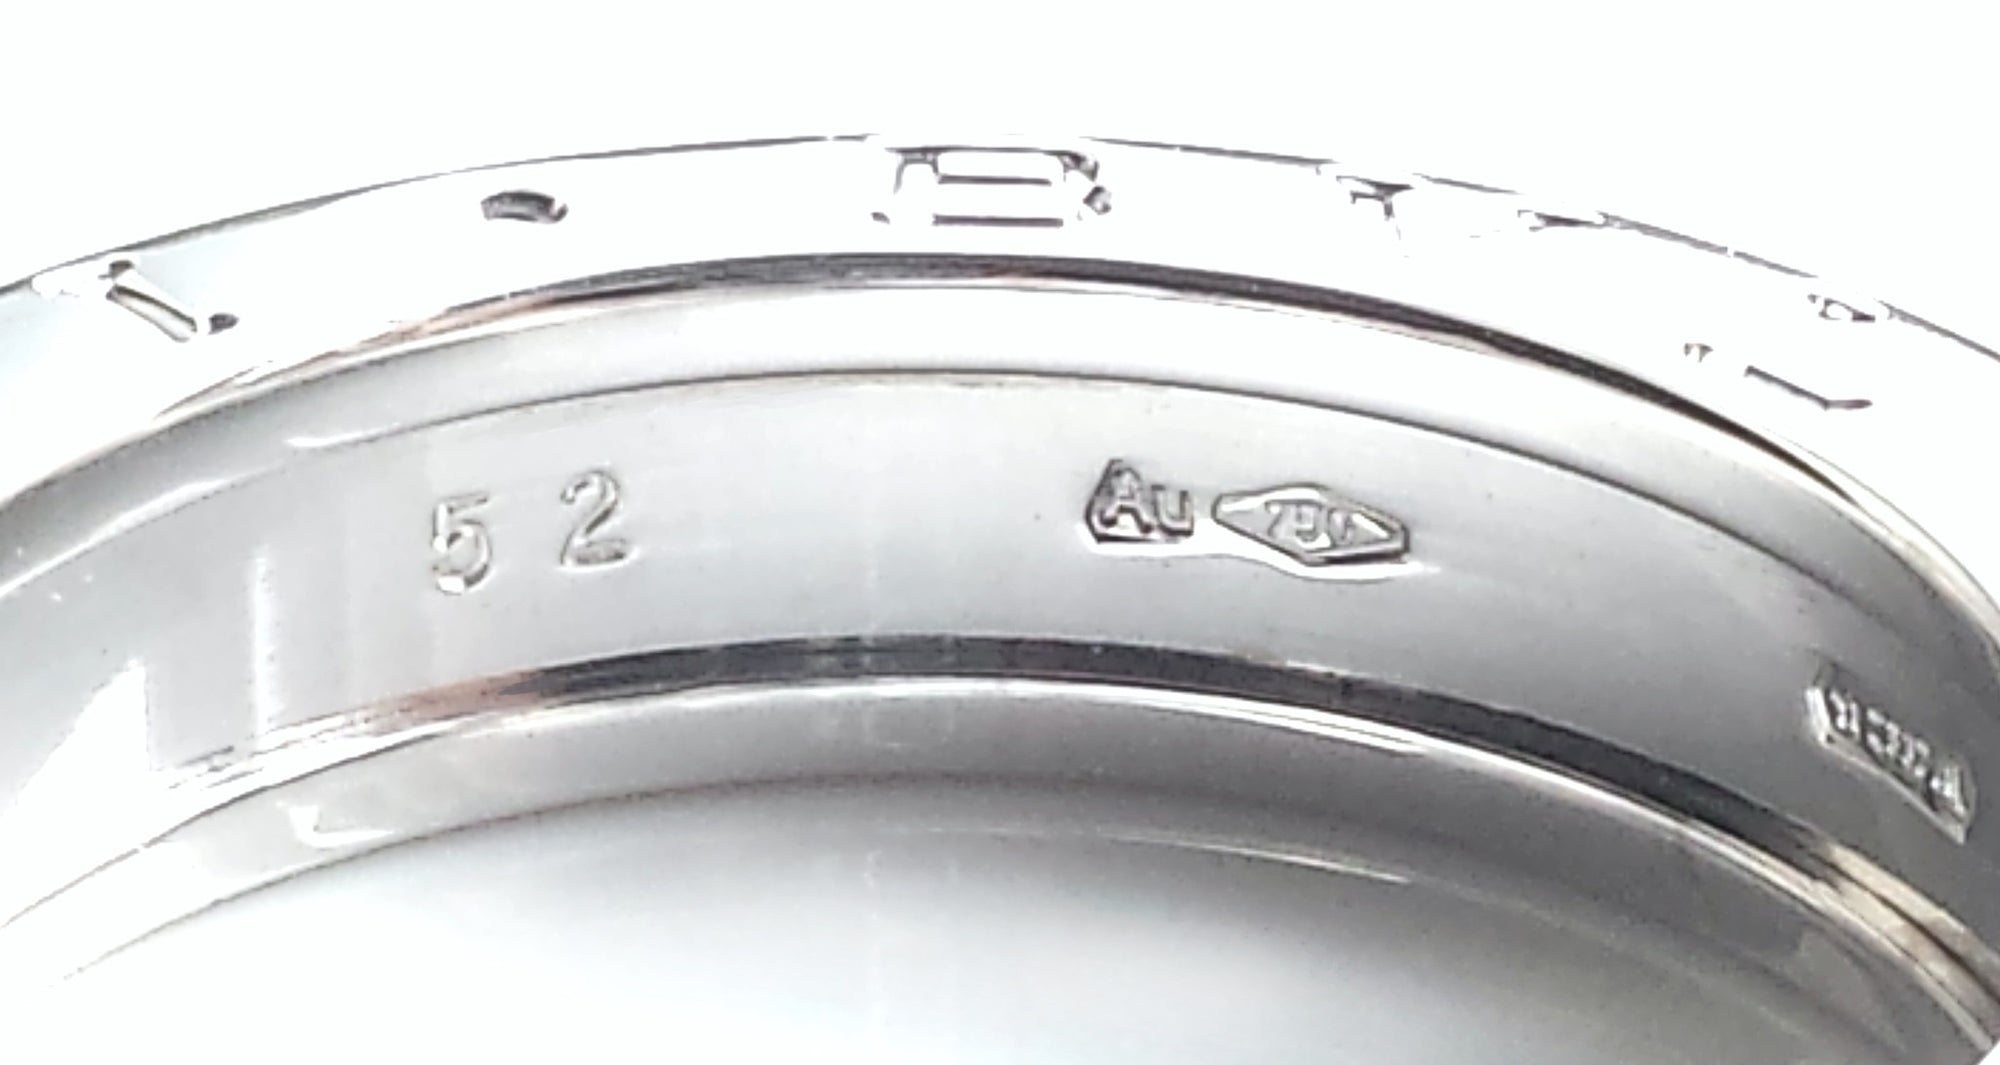 Bulgari Bvlgari B.Zero1 1-Band Ring in 18K White Gold, Size 52 (UK